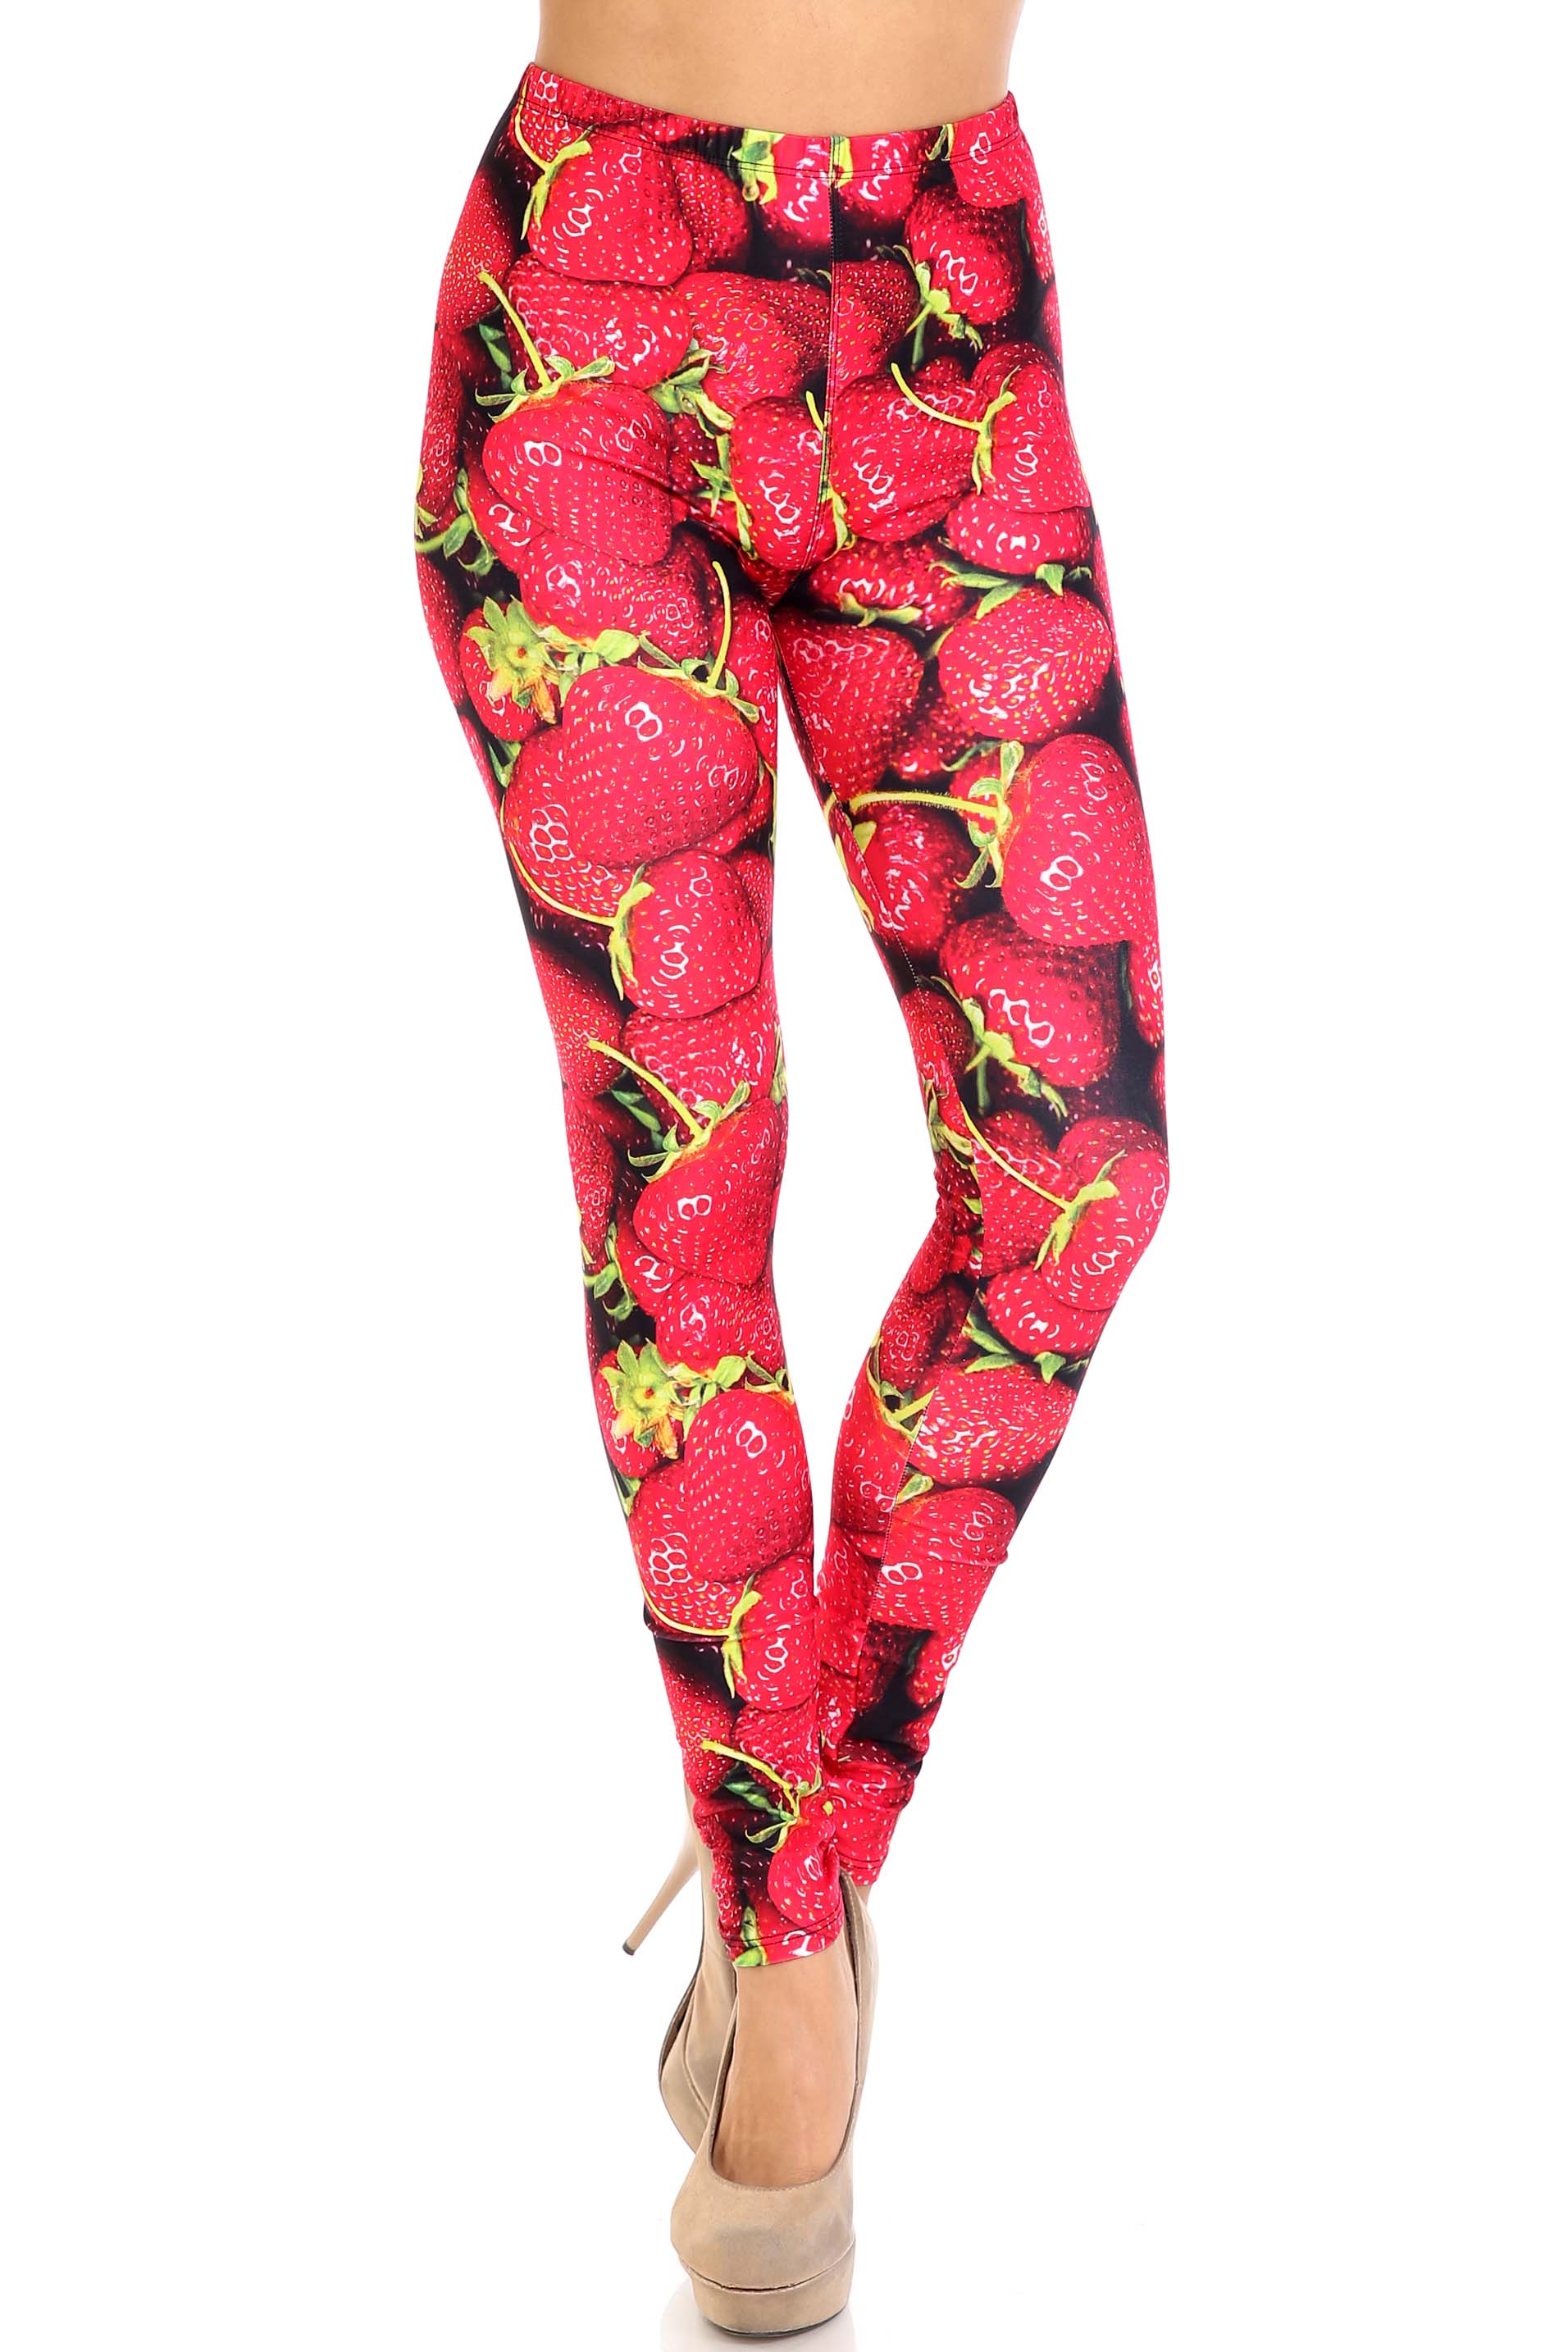 Wholesale Creamy Soft Strawberry Extra Plus Size Leggings - 3X-5X - USA Fashion™